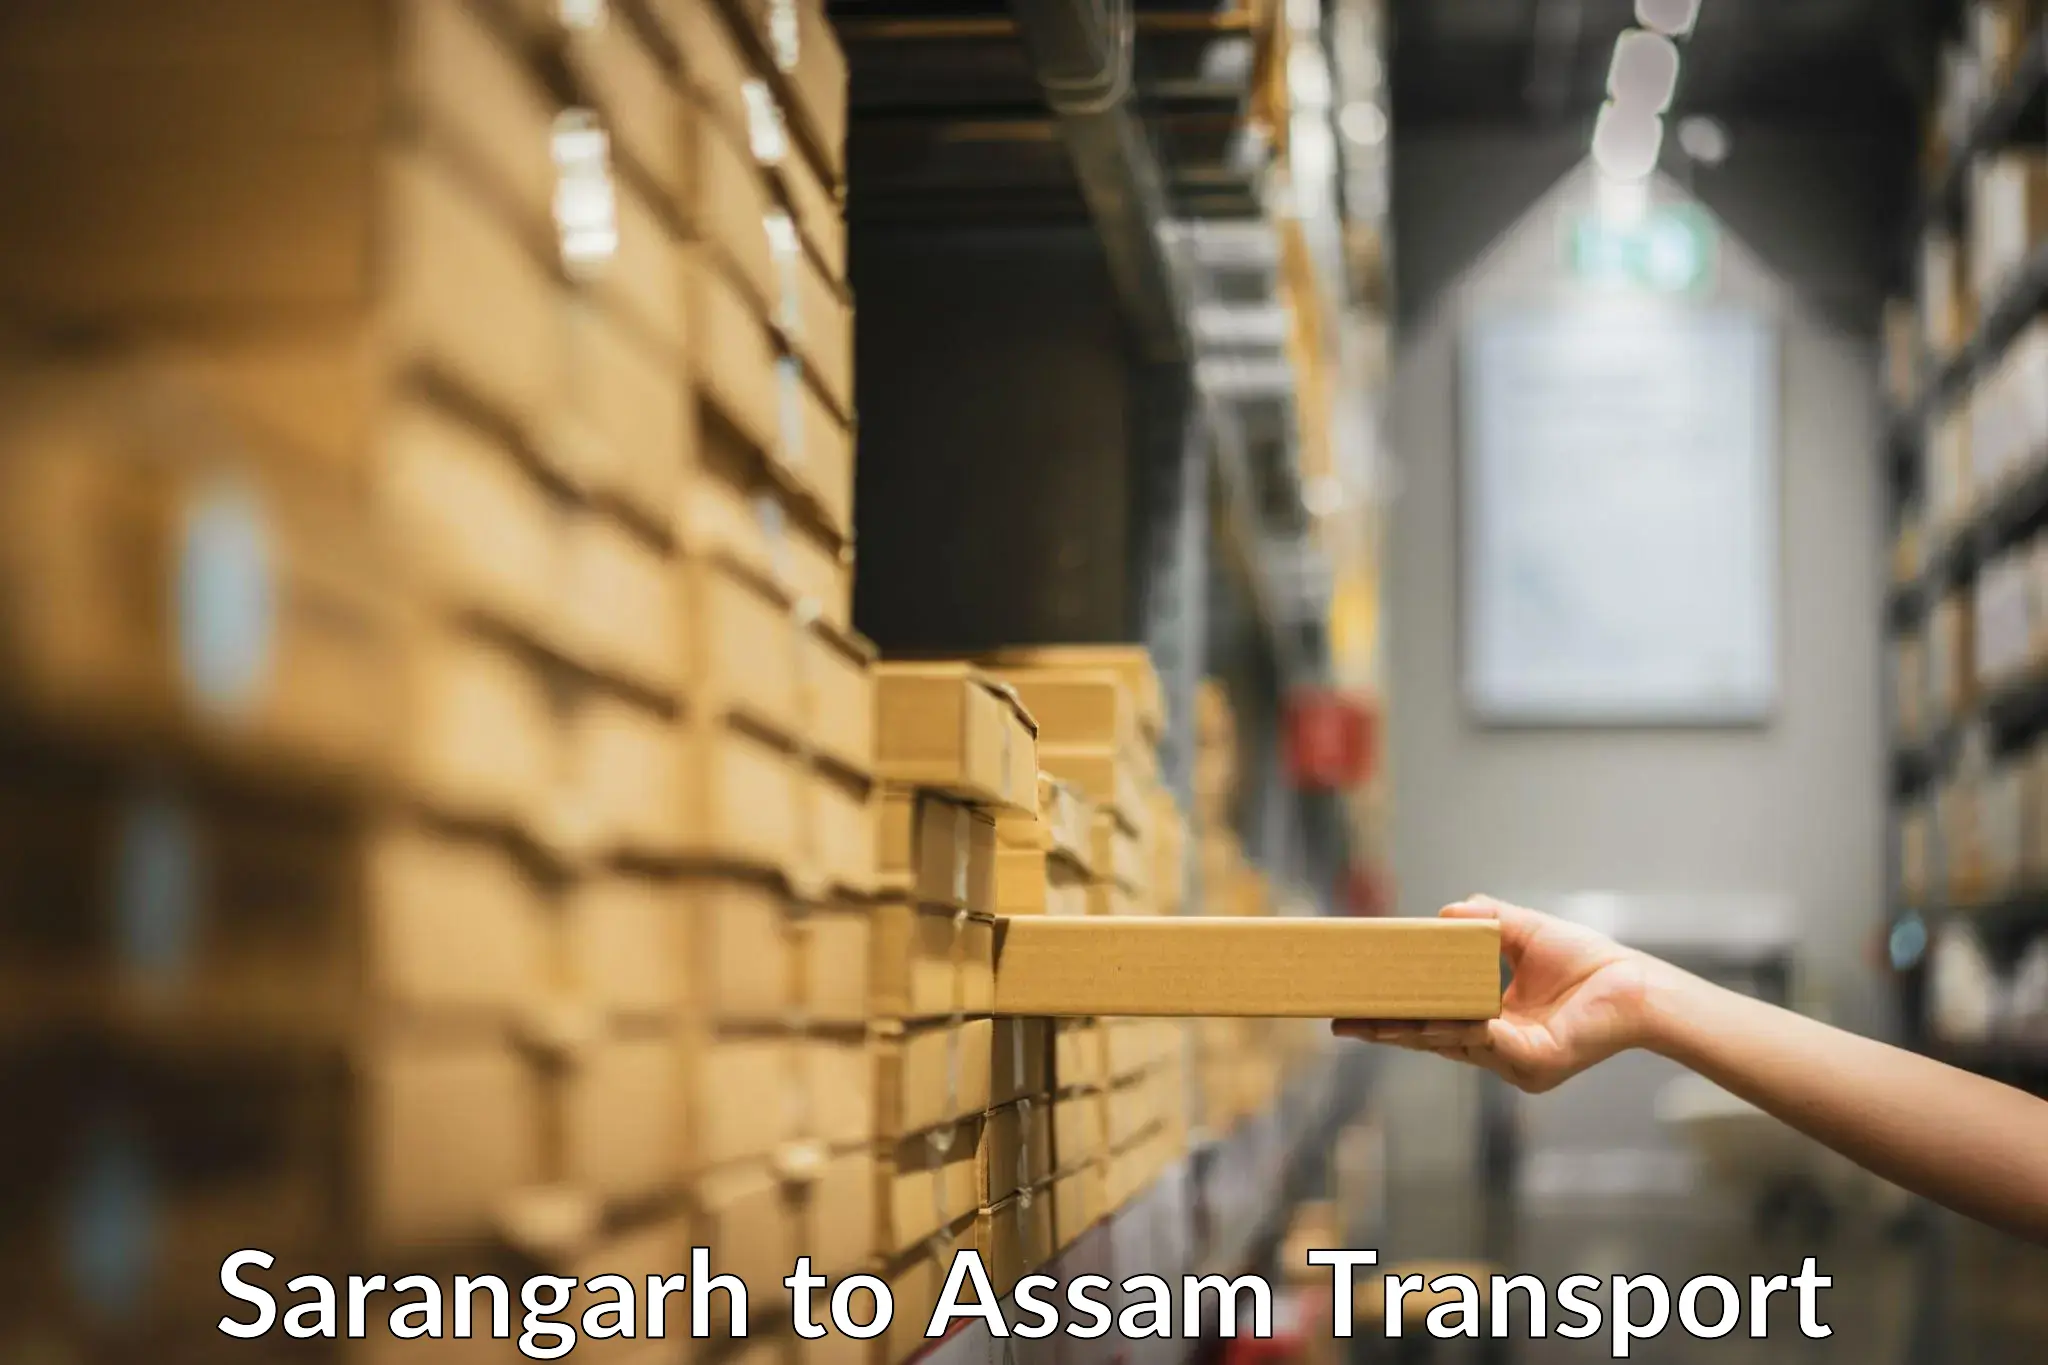 Shipping partner Sarangarh to Assam